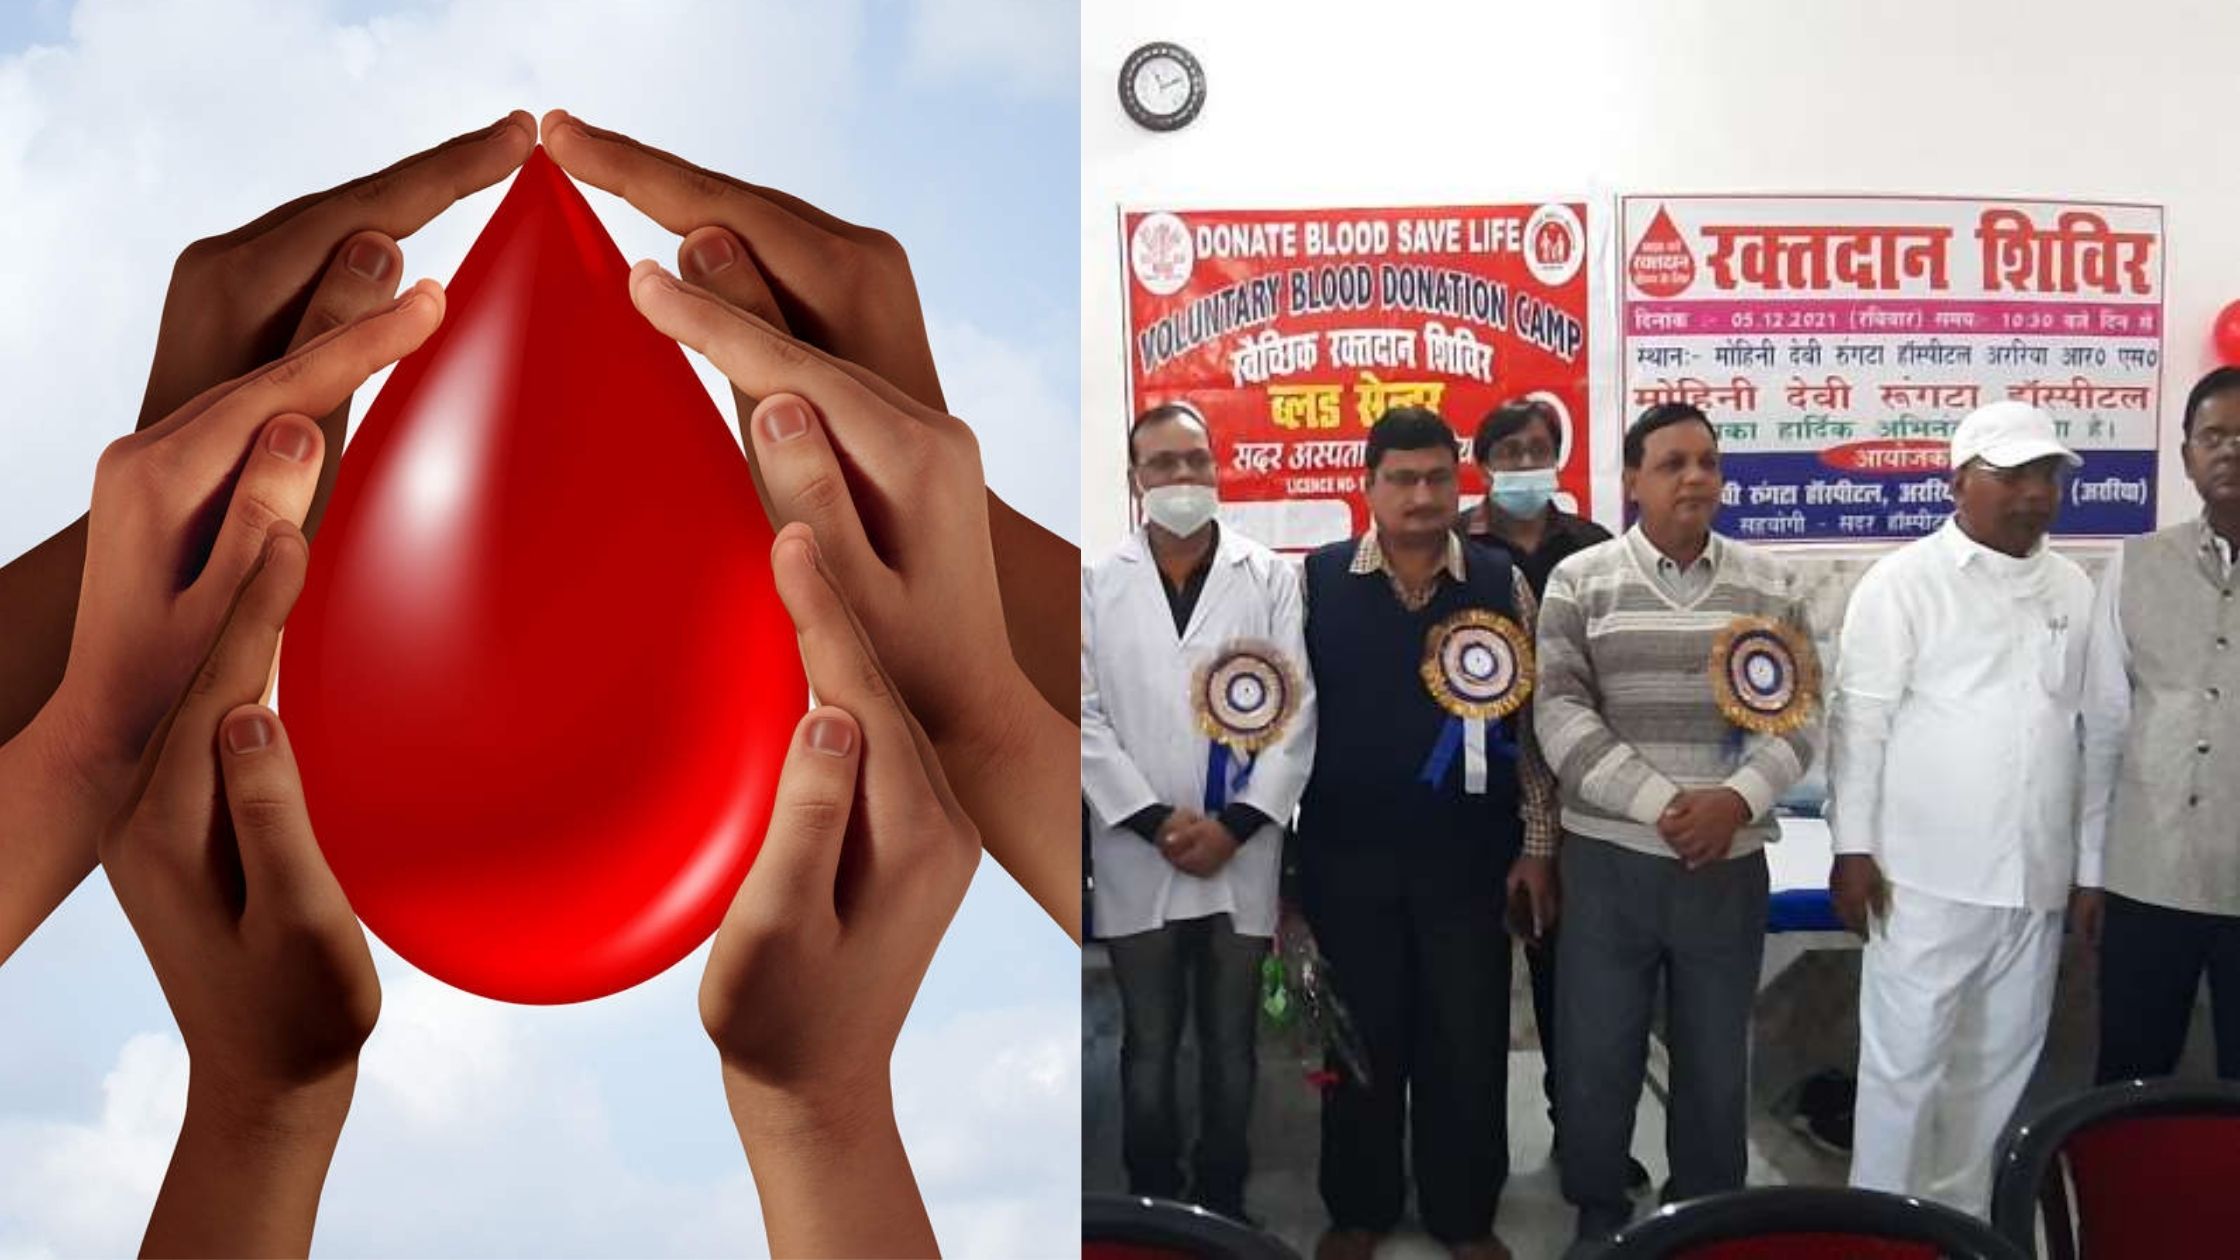 Araria blood bank has so far saved 161 lives